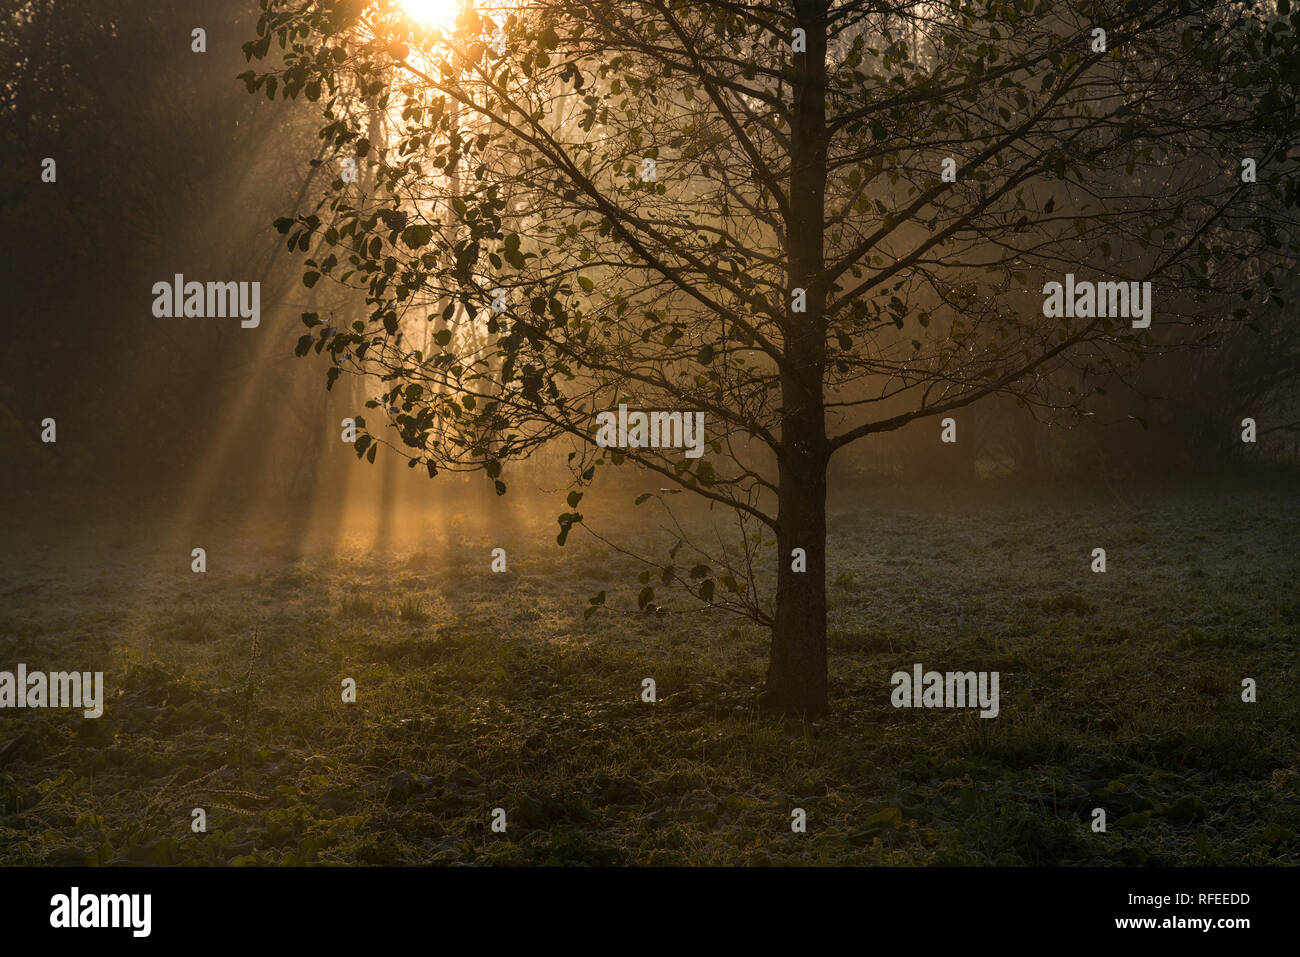 Golden sun rays penetrate through the trees on early foggy autumn morning Stock Photo